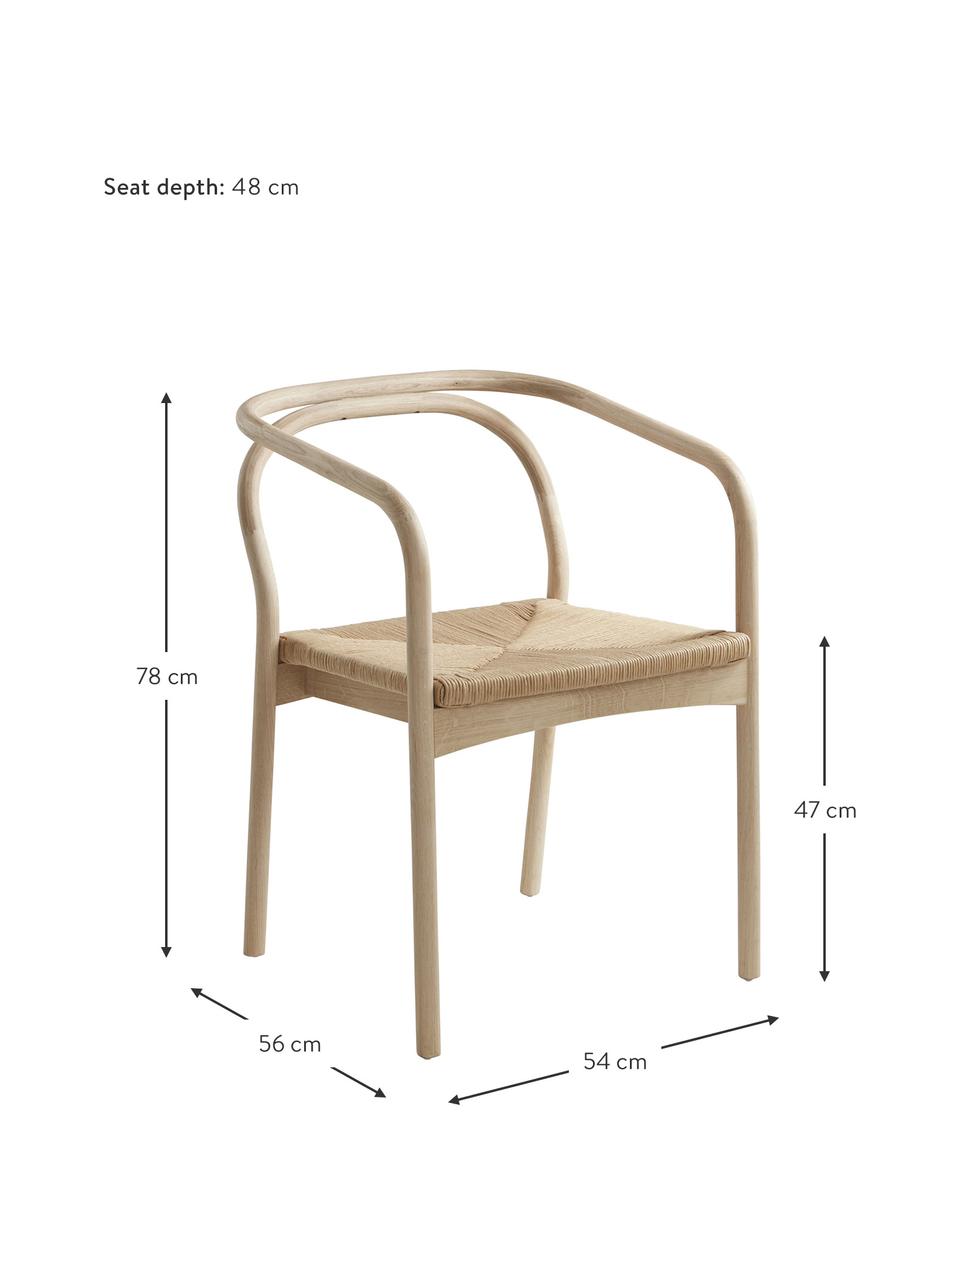 Eichenholz-Armlehnstuhl Holzstuhl Lidingo mit Schnurgeflecht, Rahmen: Eichenholz, weiß gekalkt, Sitzfläche: Papierschnurgeflecht, Beige, B 54 x T 56 cm